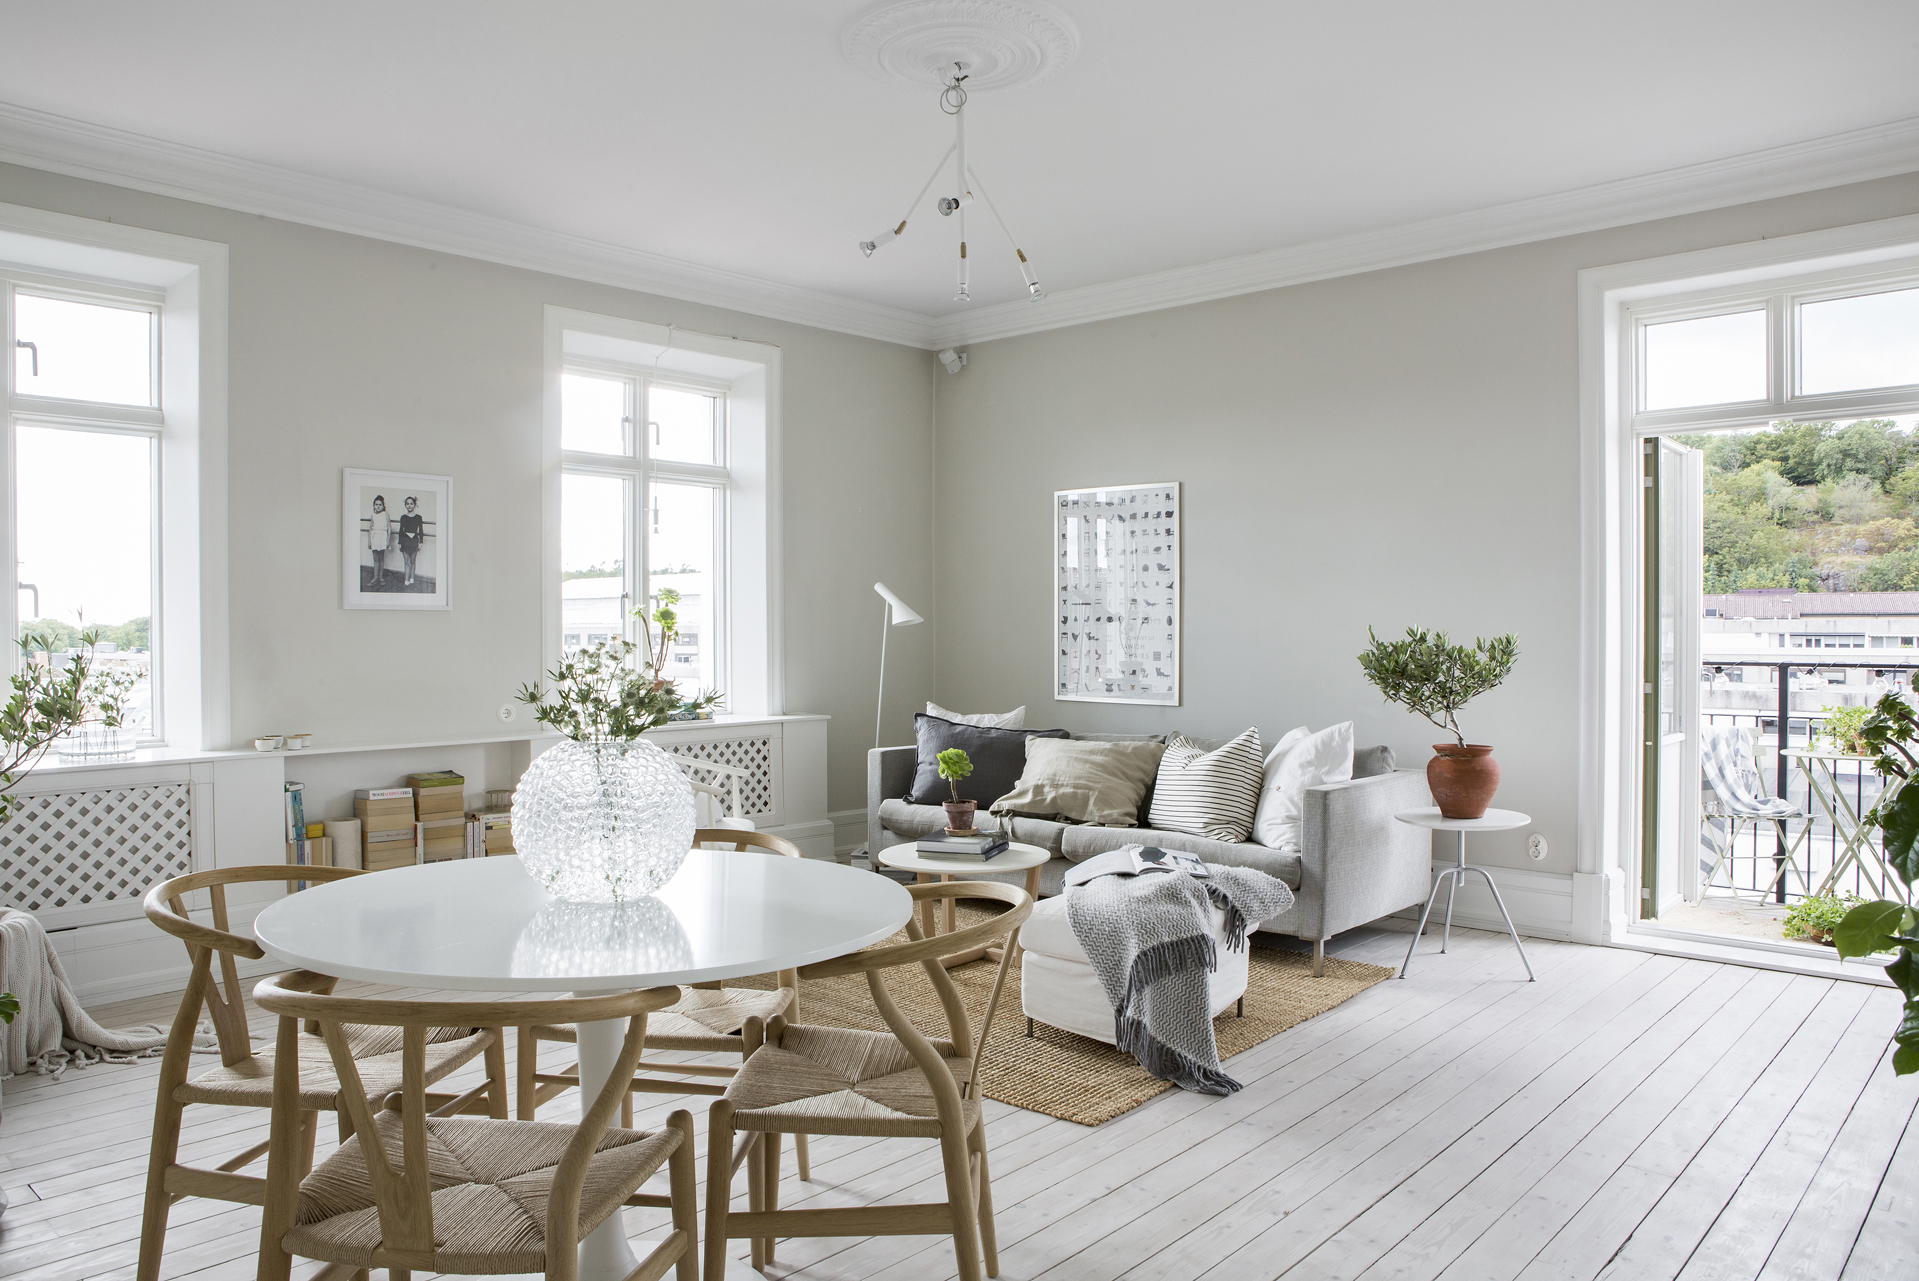 delikatissen piso sueco estilo nórdico decoración pisos pequeños decoración neutros decoración escandinava decoración en blanco decoración áticos Ático nórdico en blancos y neutros 